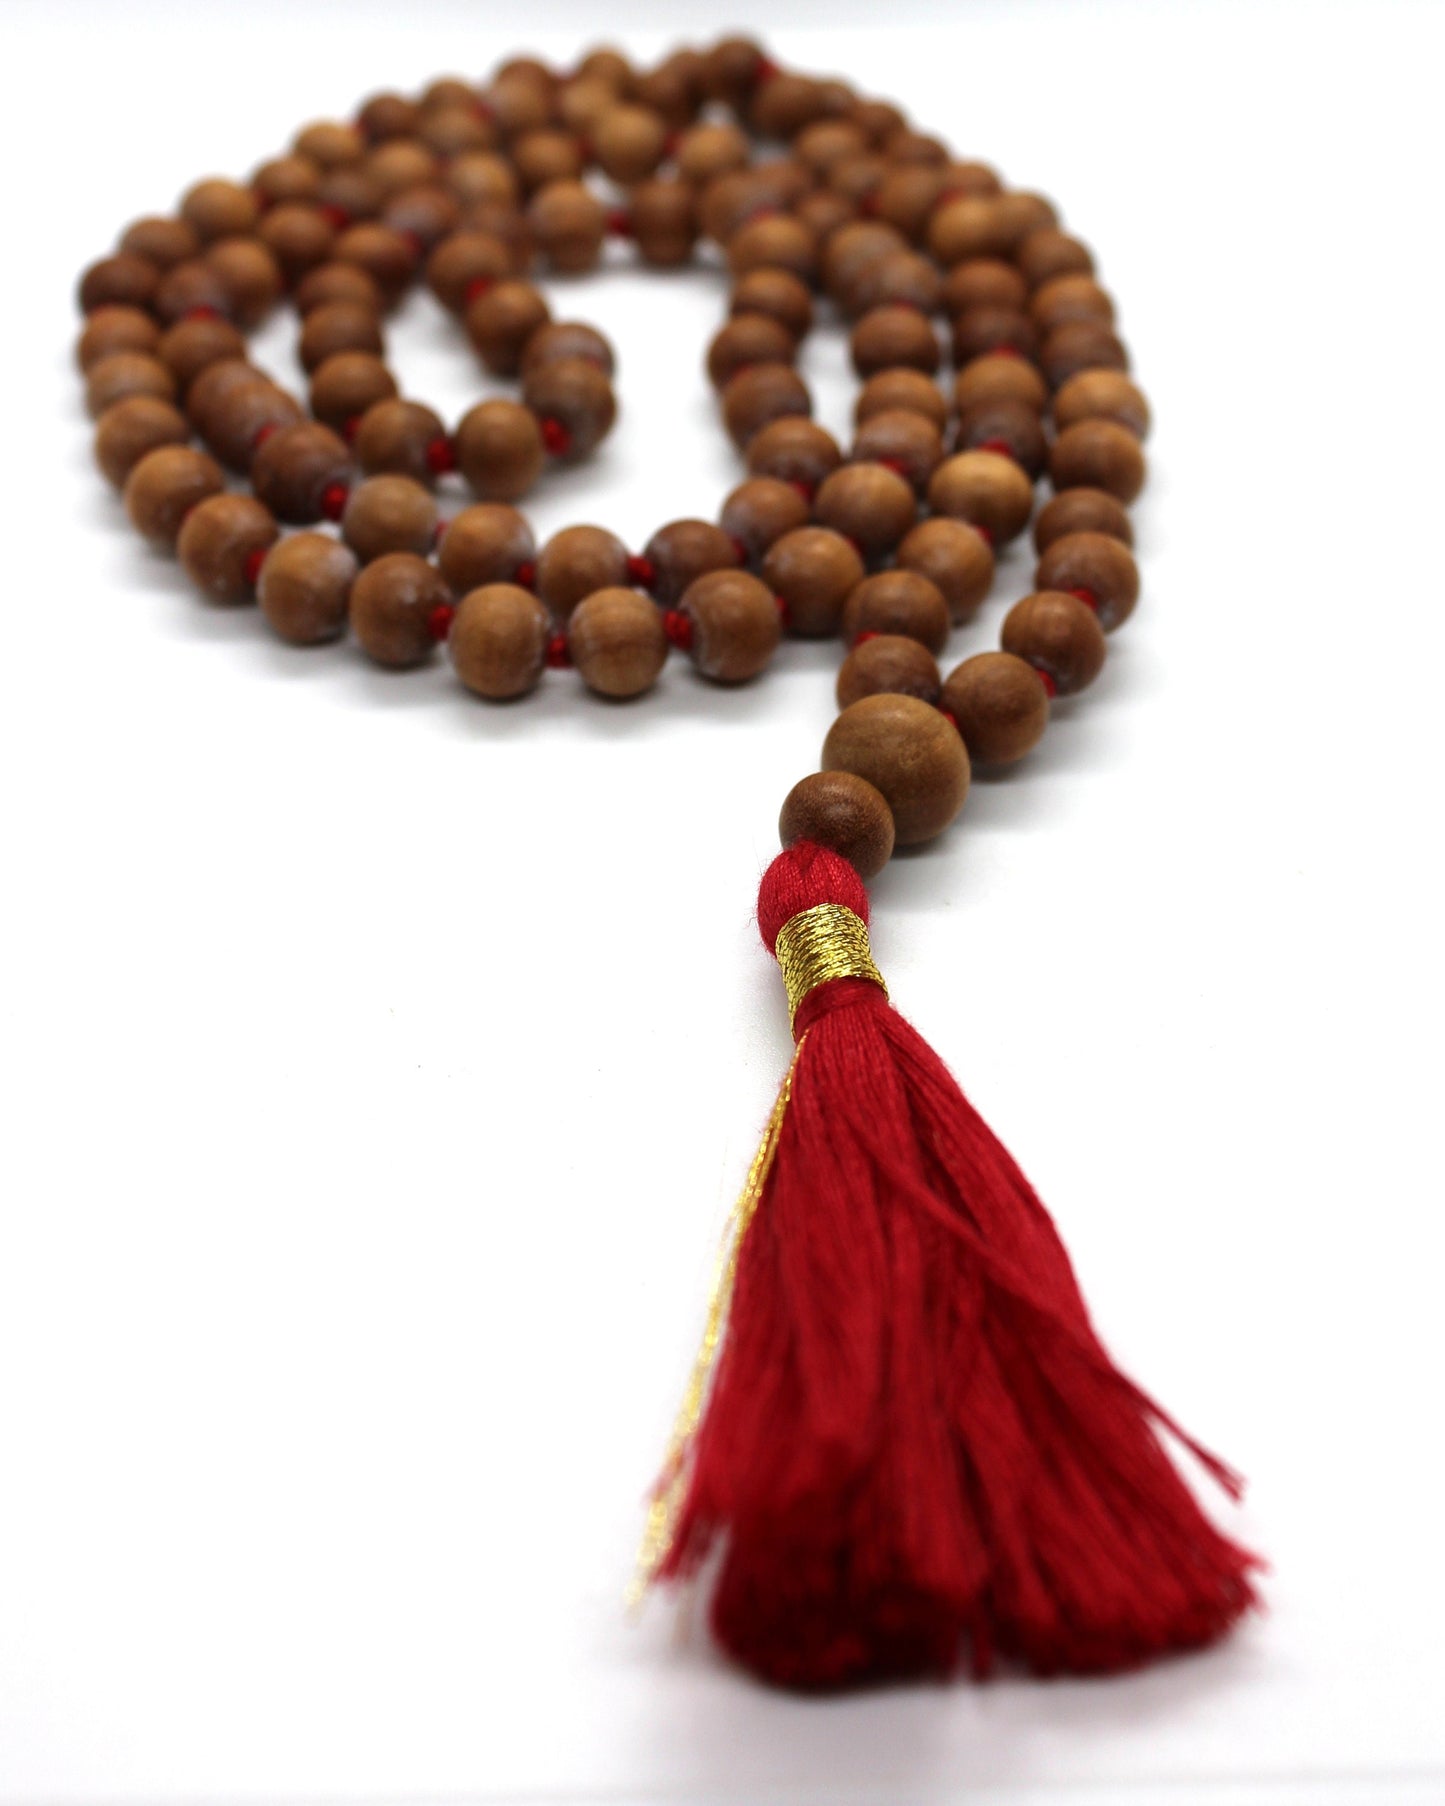 Natural Fragrant 100+1 Beads Sandalwood Handmade Mala Hindu Prayer Beads Mala Yoga Mediation Chandan Mala Handmade With Red cotton Tassel OM